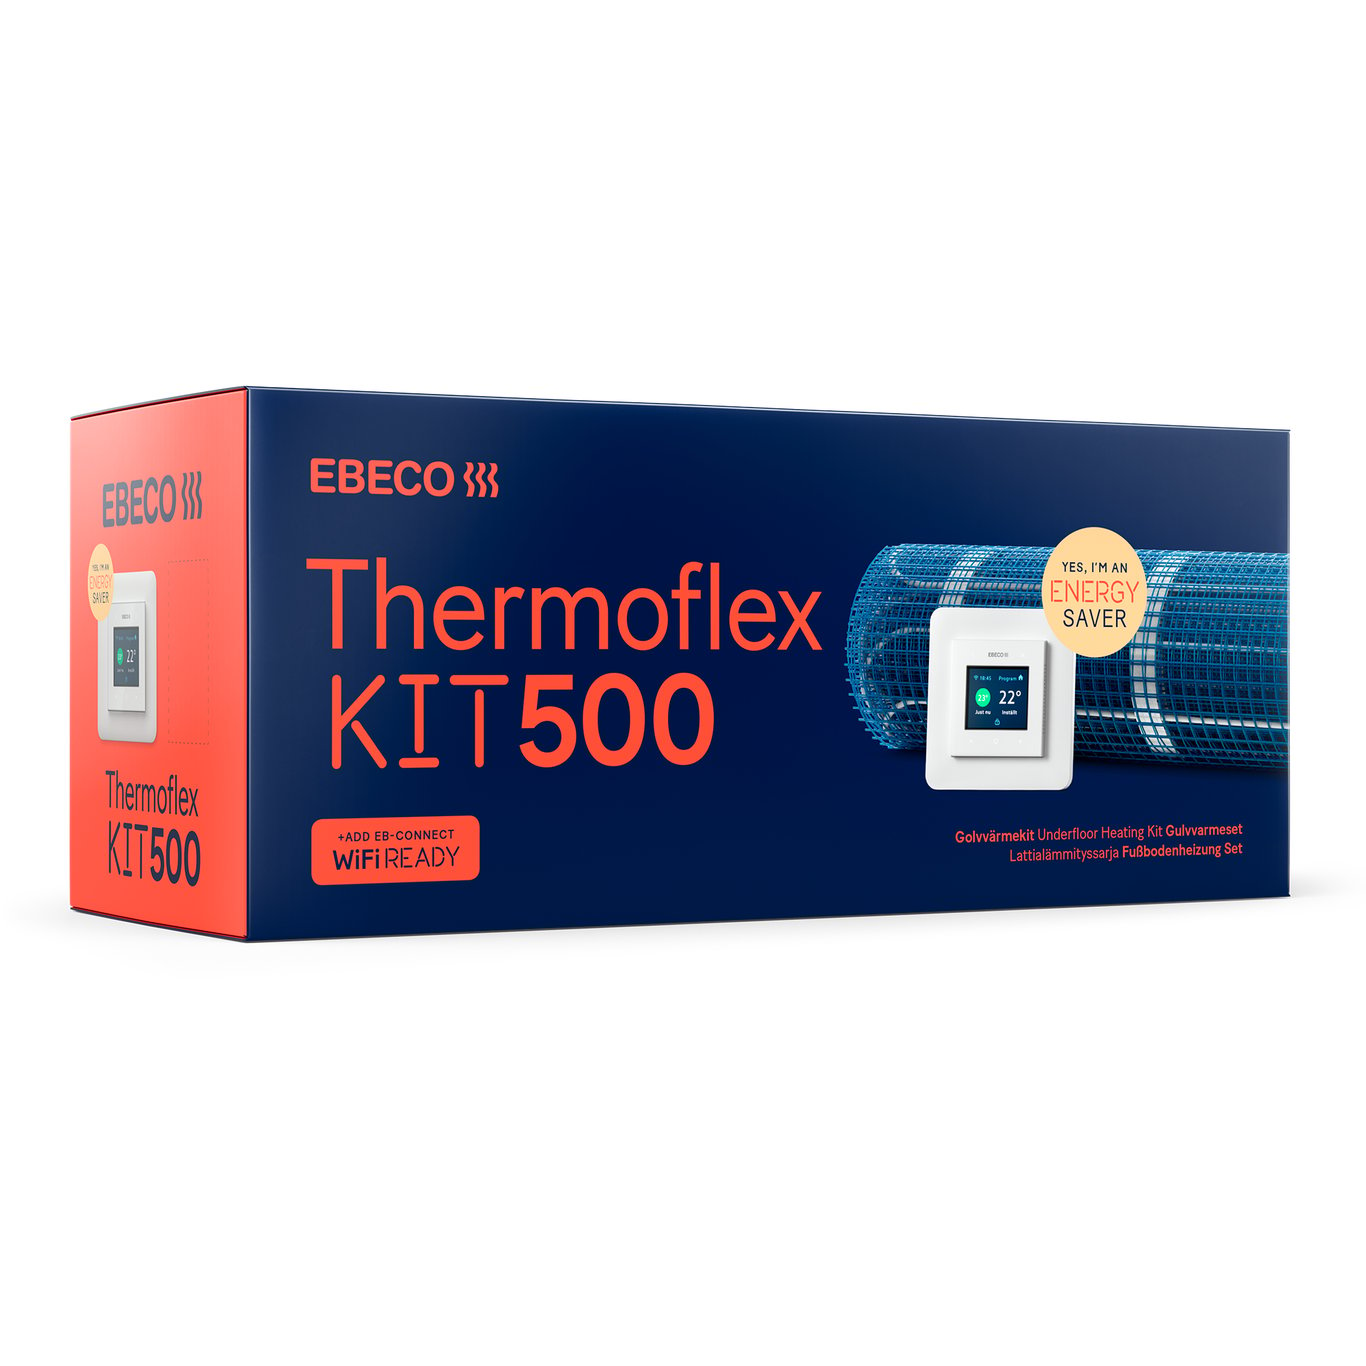 EBECO THERMOFLEX KIT 500 2,1M2 250W